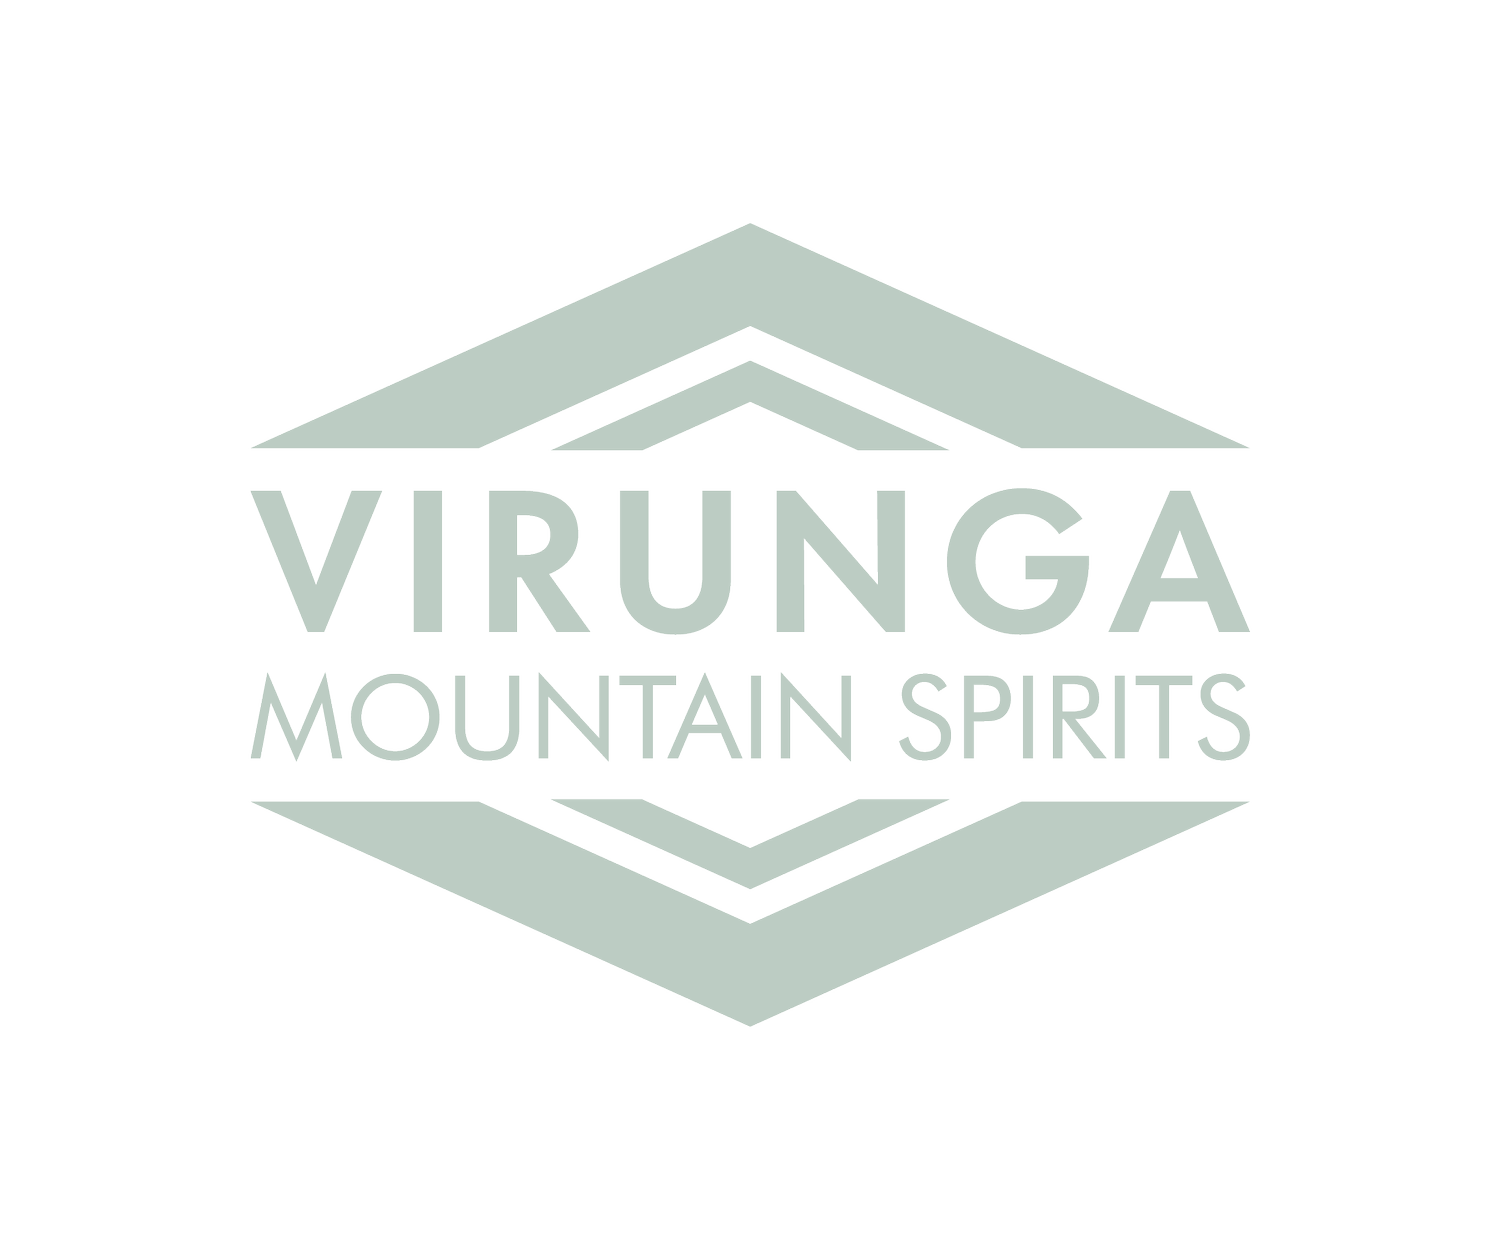 VIRUNGA MOUNTAIN SPIRITS